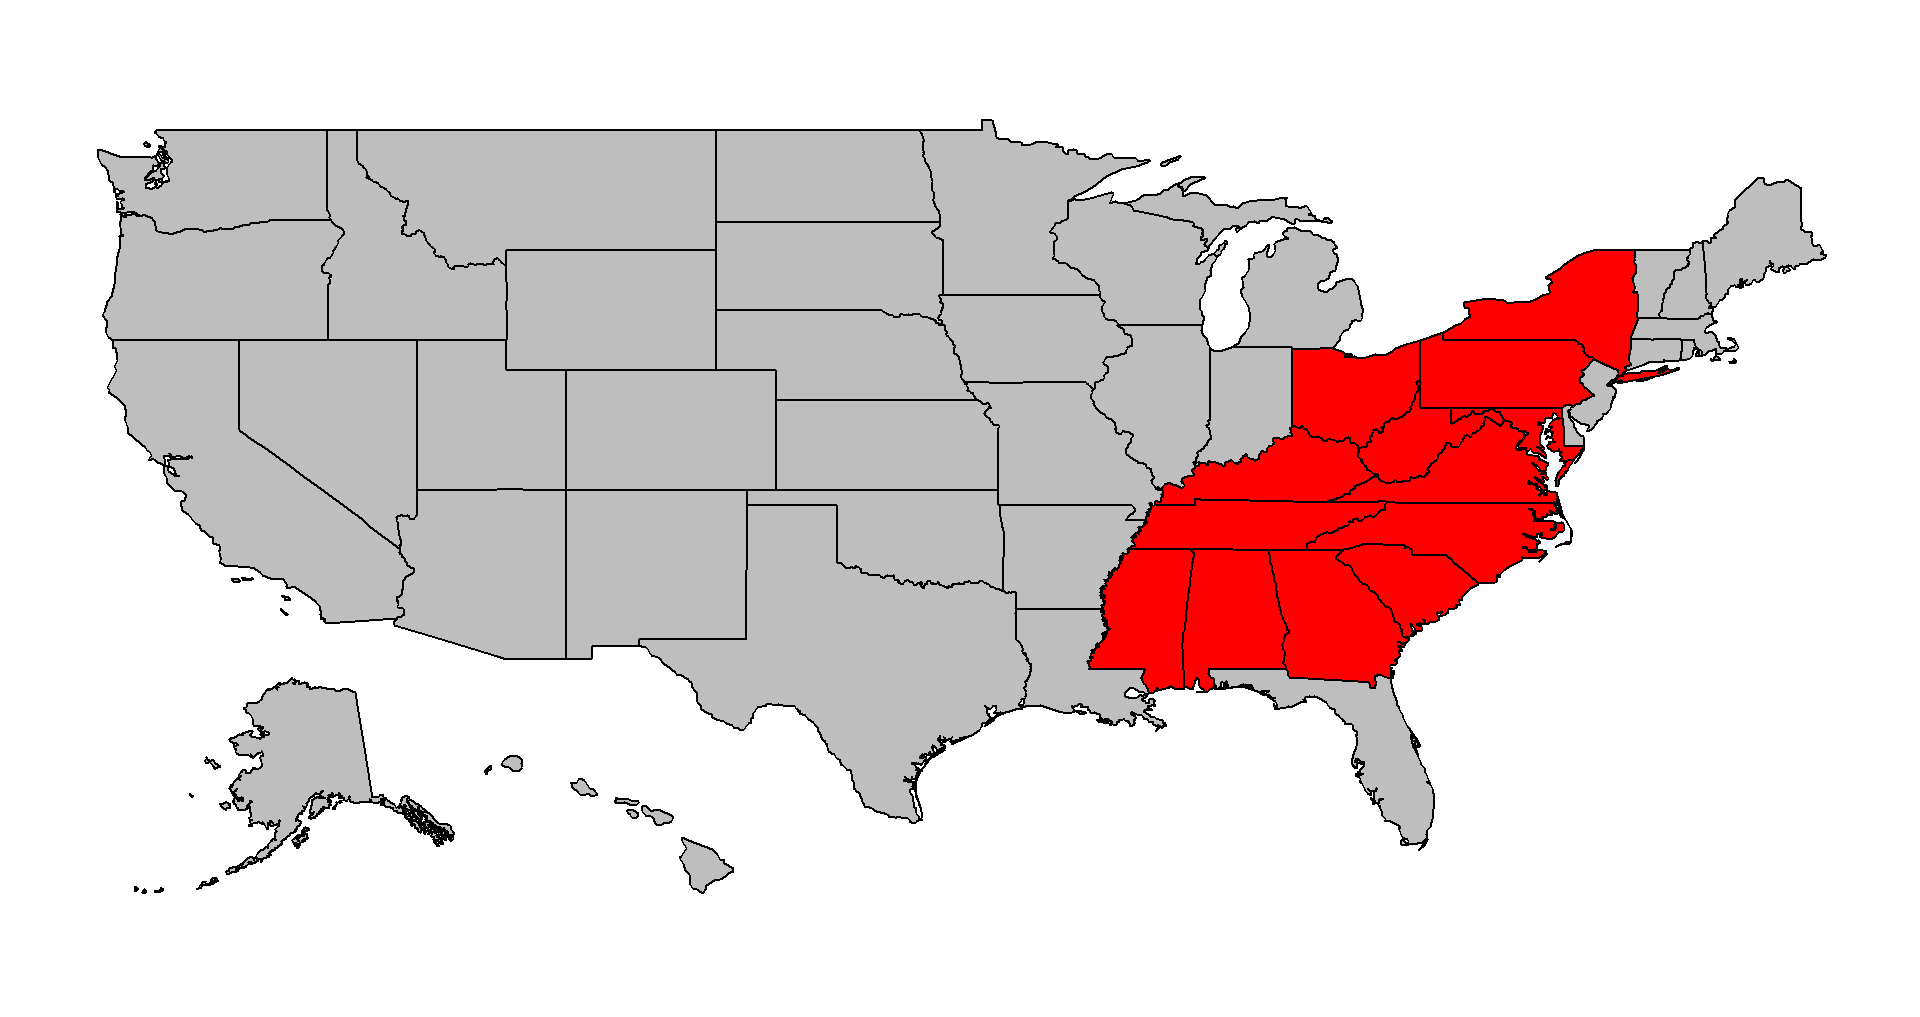 The Appalachian Region